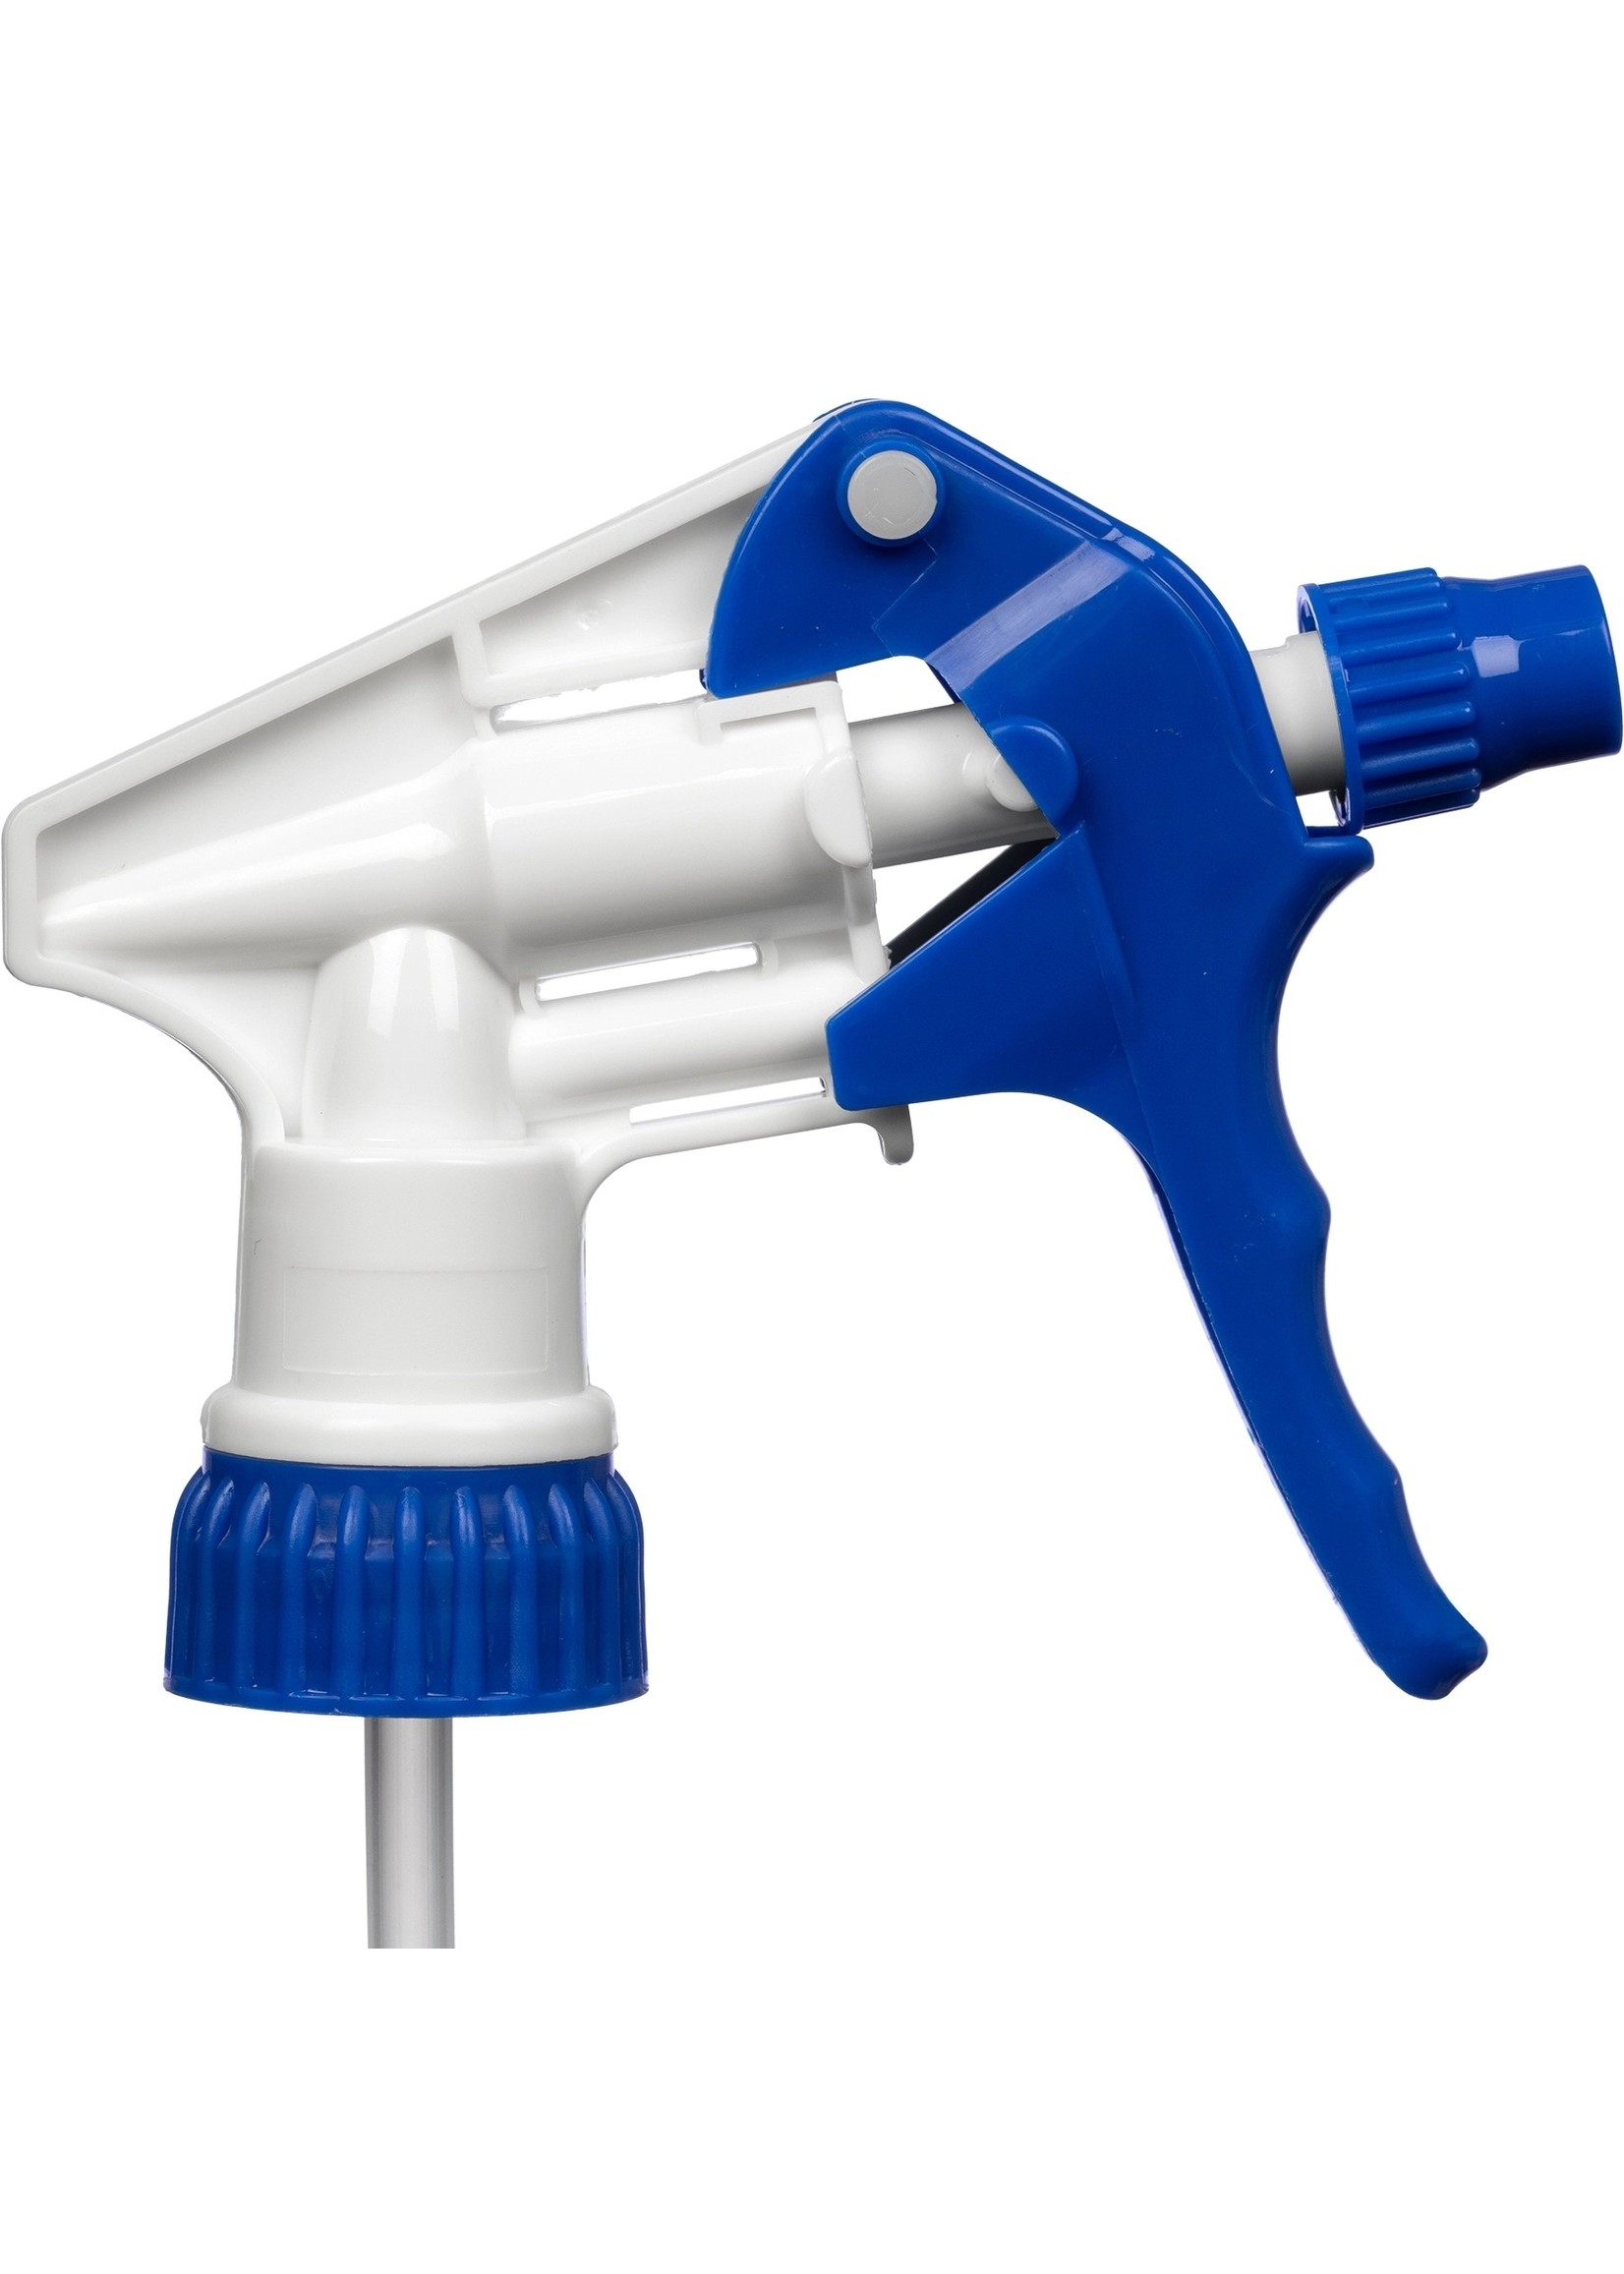 GST White & Blue Trigger Sprayer